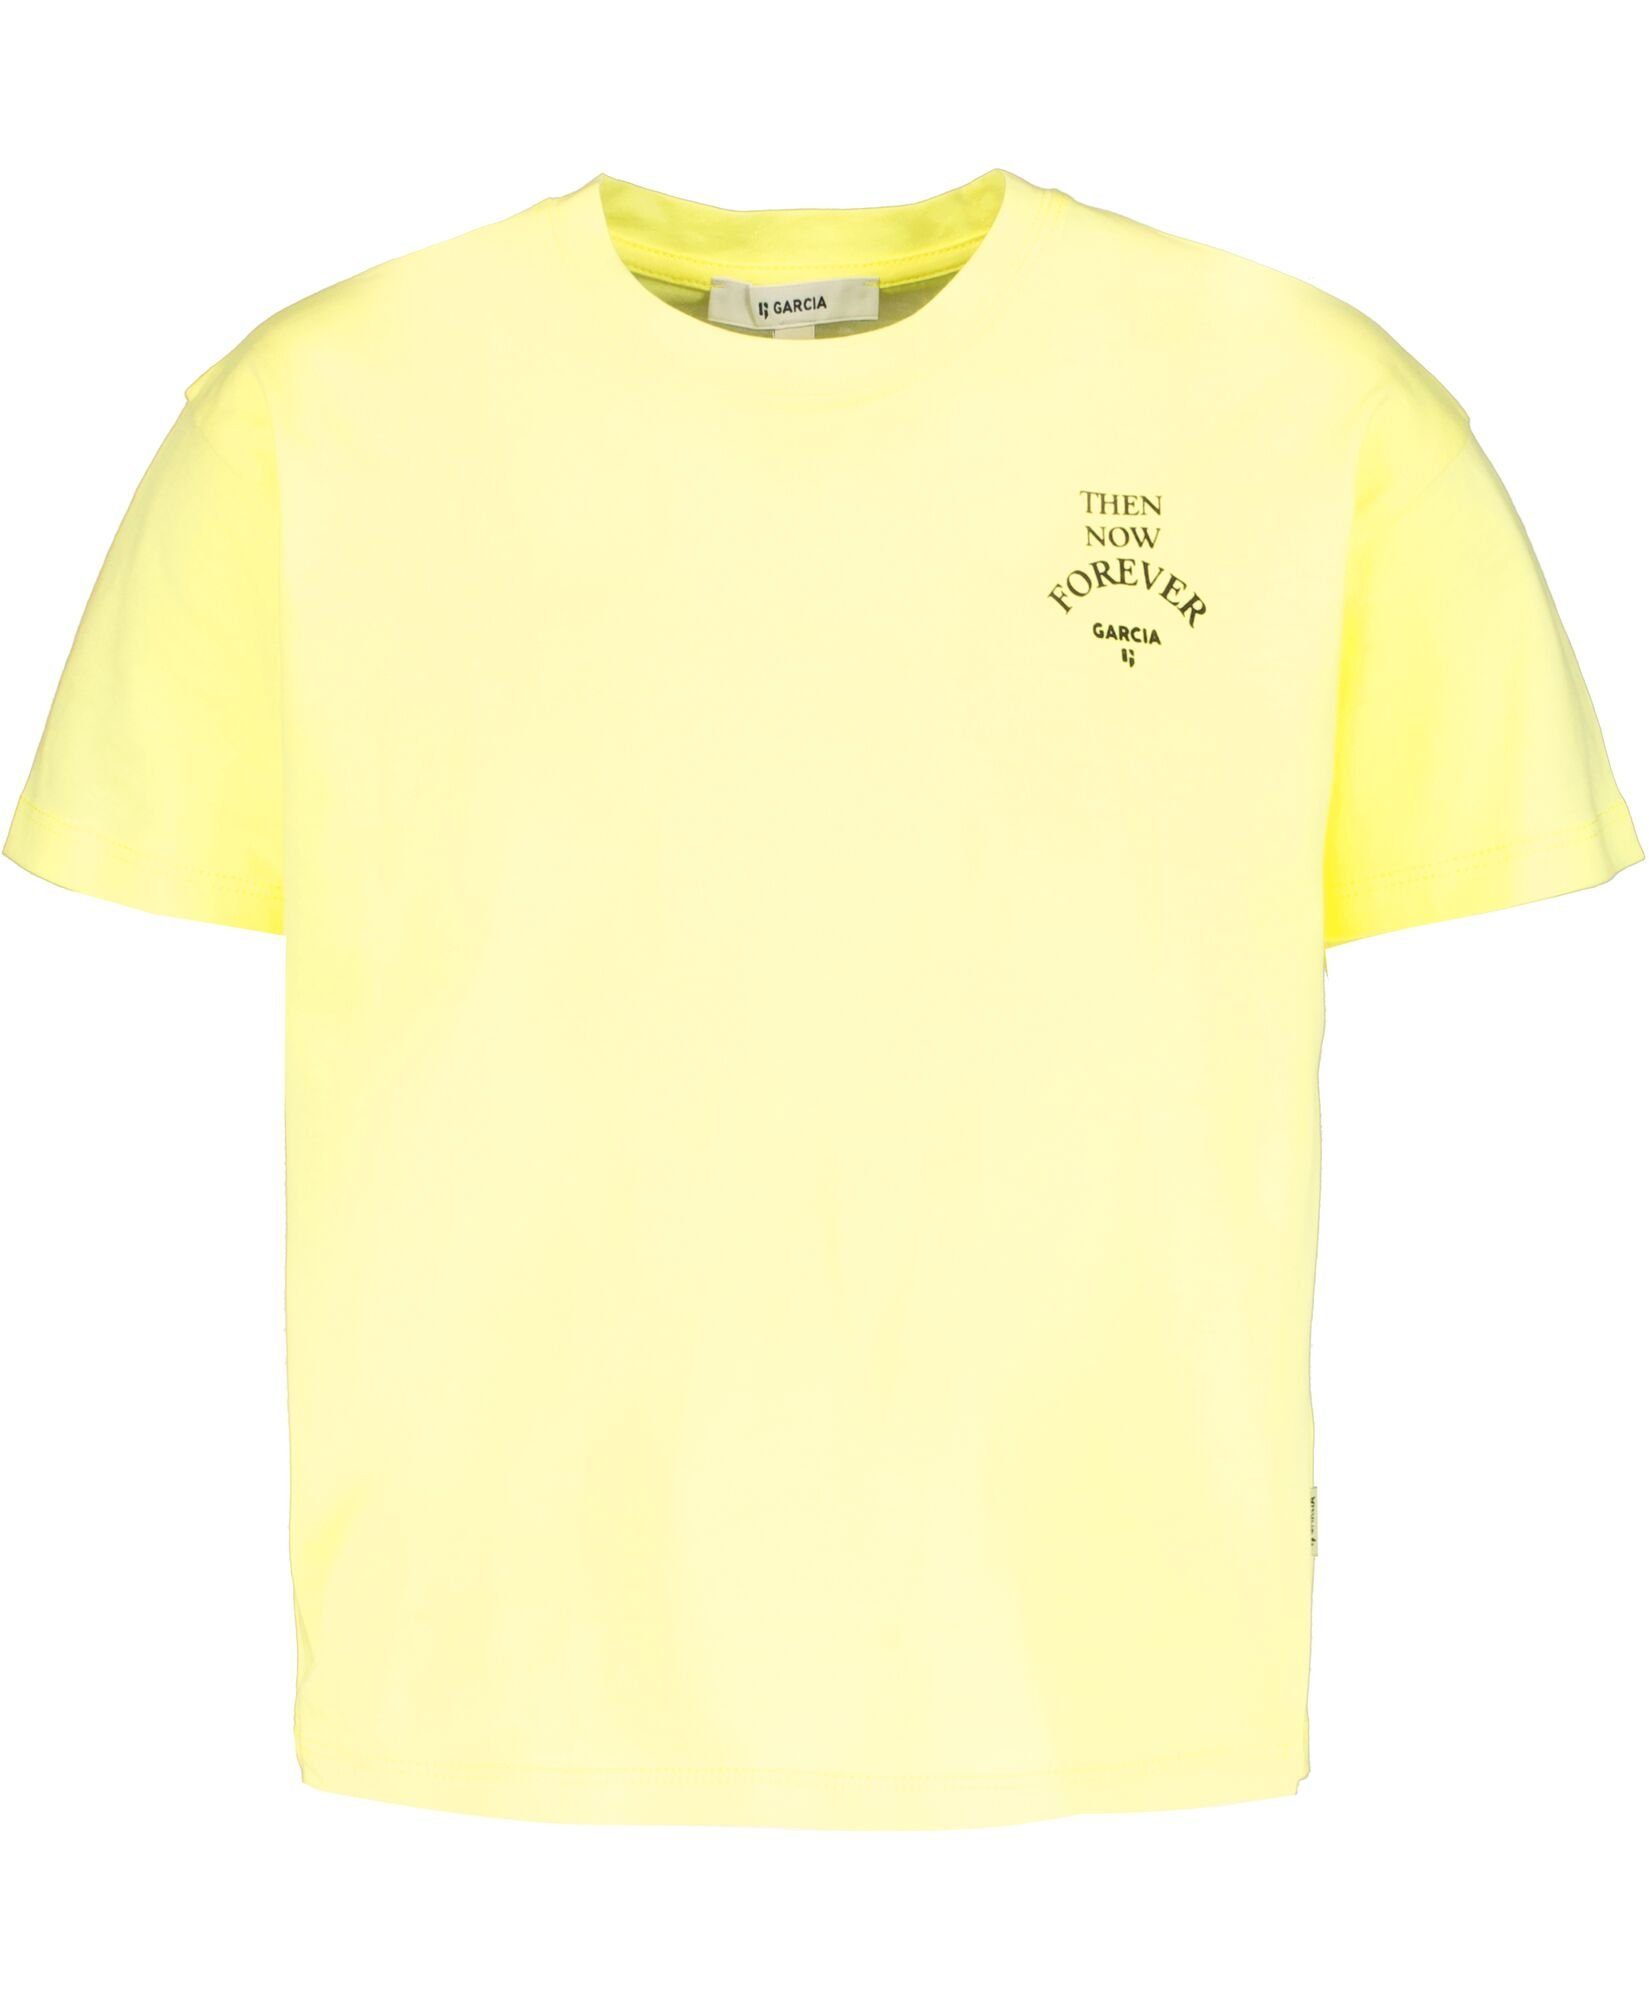 Garcia T-Shirt Basic lemon fresh cropped